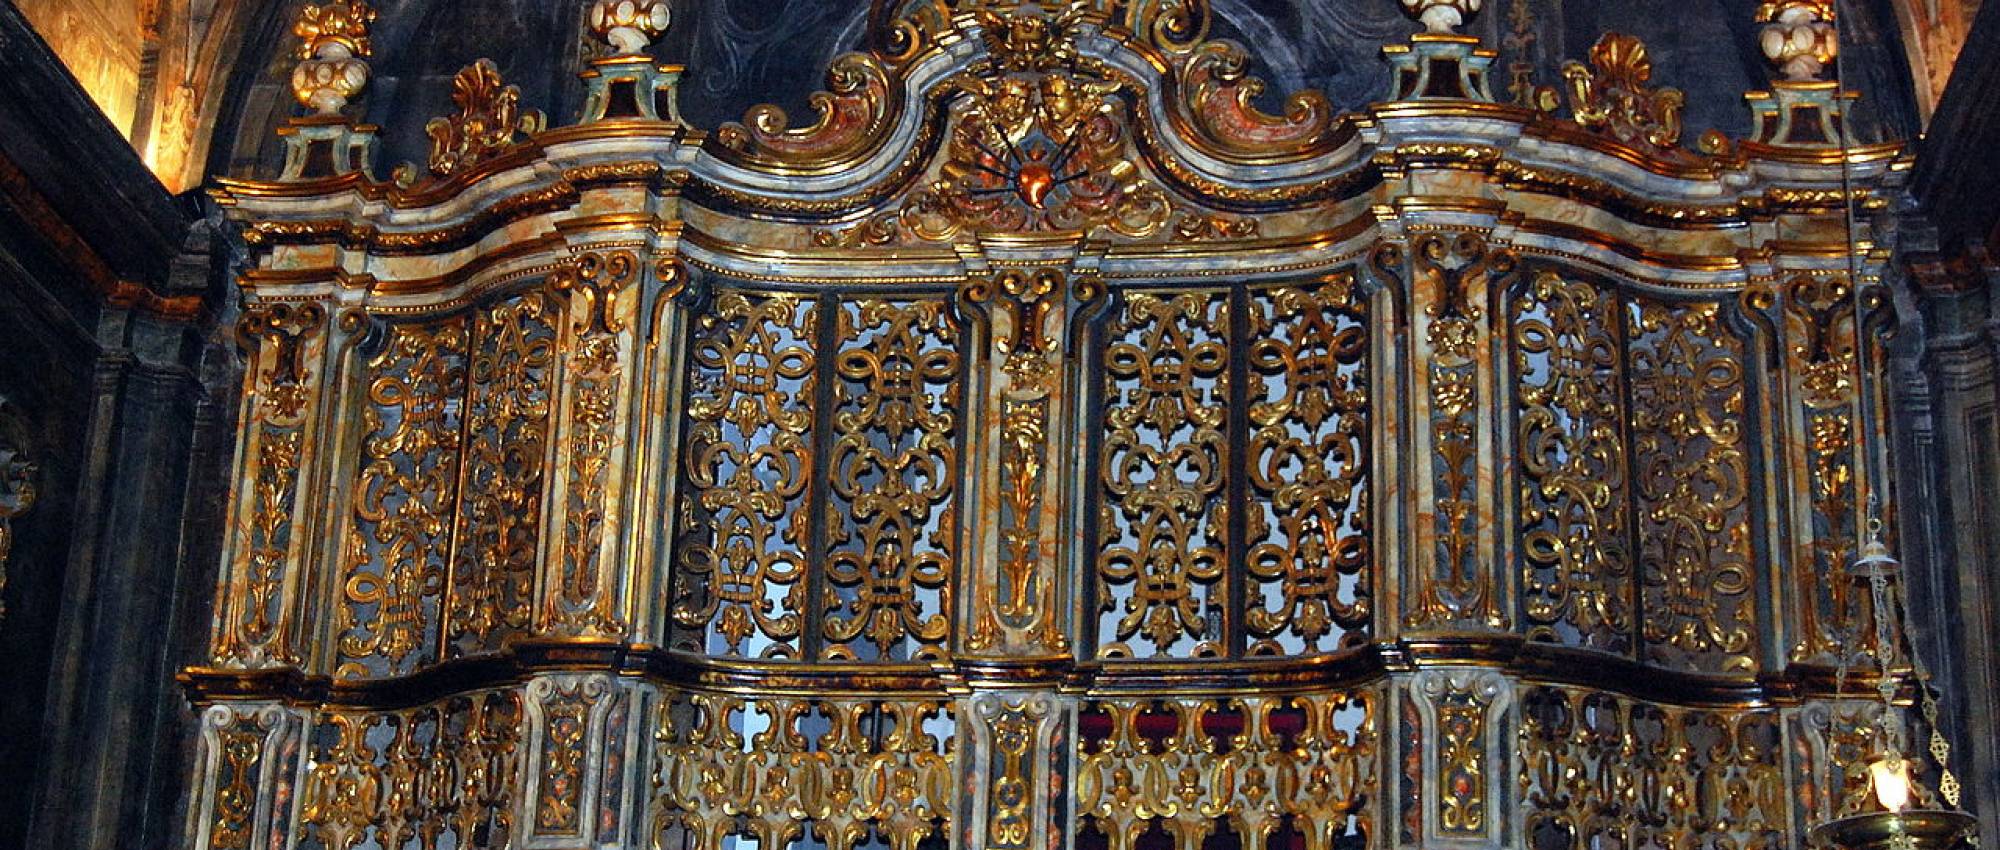 Coro de la capilla de los Dolores. Angela Llop / Wikimedia Commons. CC BY-SA 2.0